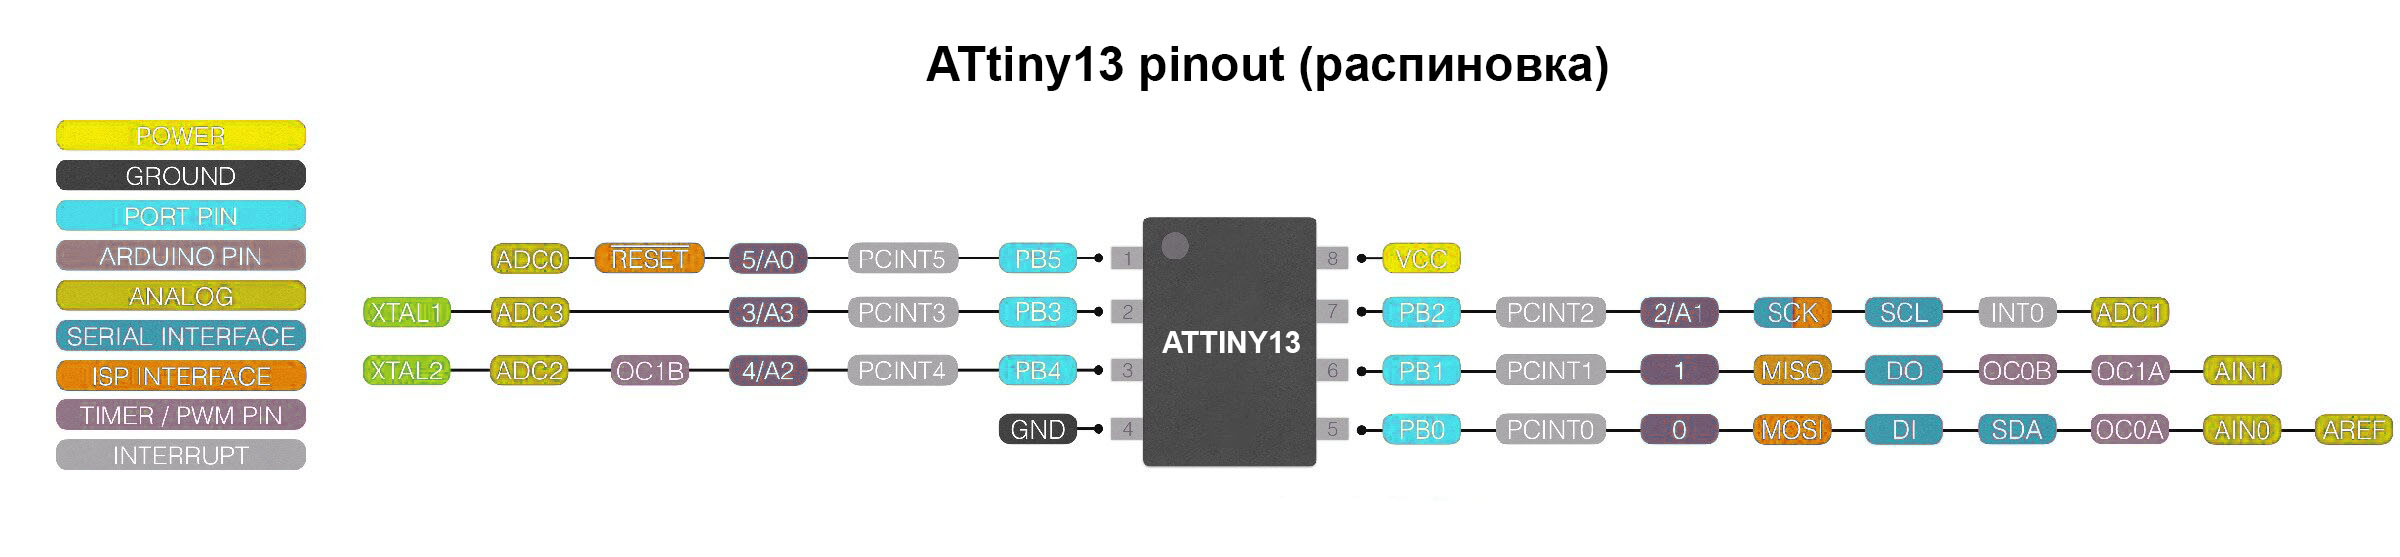 Attiny13 pinout (распиновка)